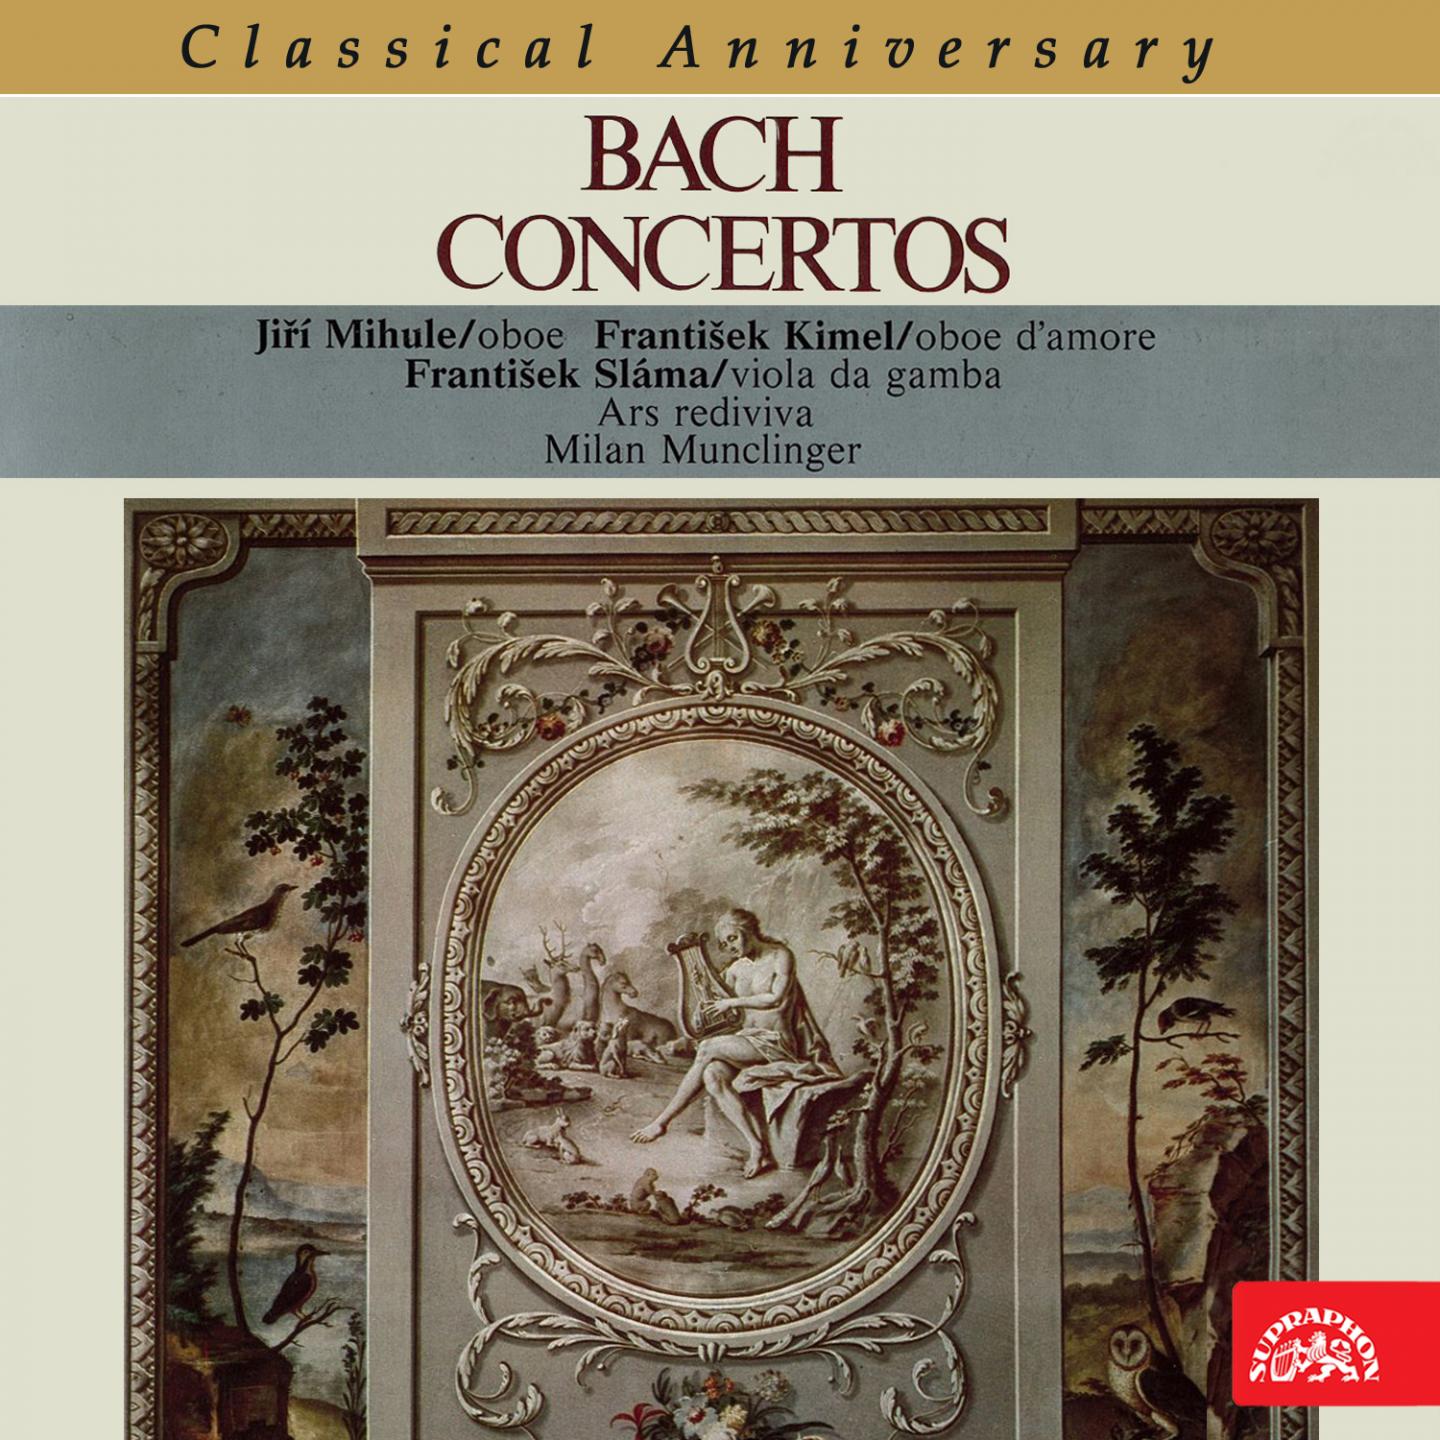 Oboe d'amore Concerto in A Major, BWV 1055R: I. Allegro